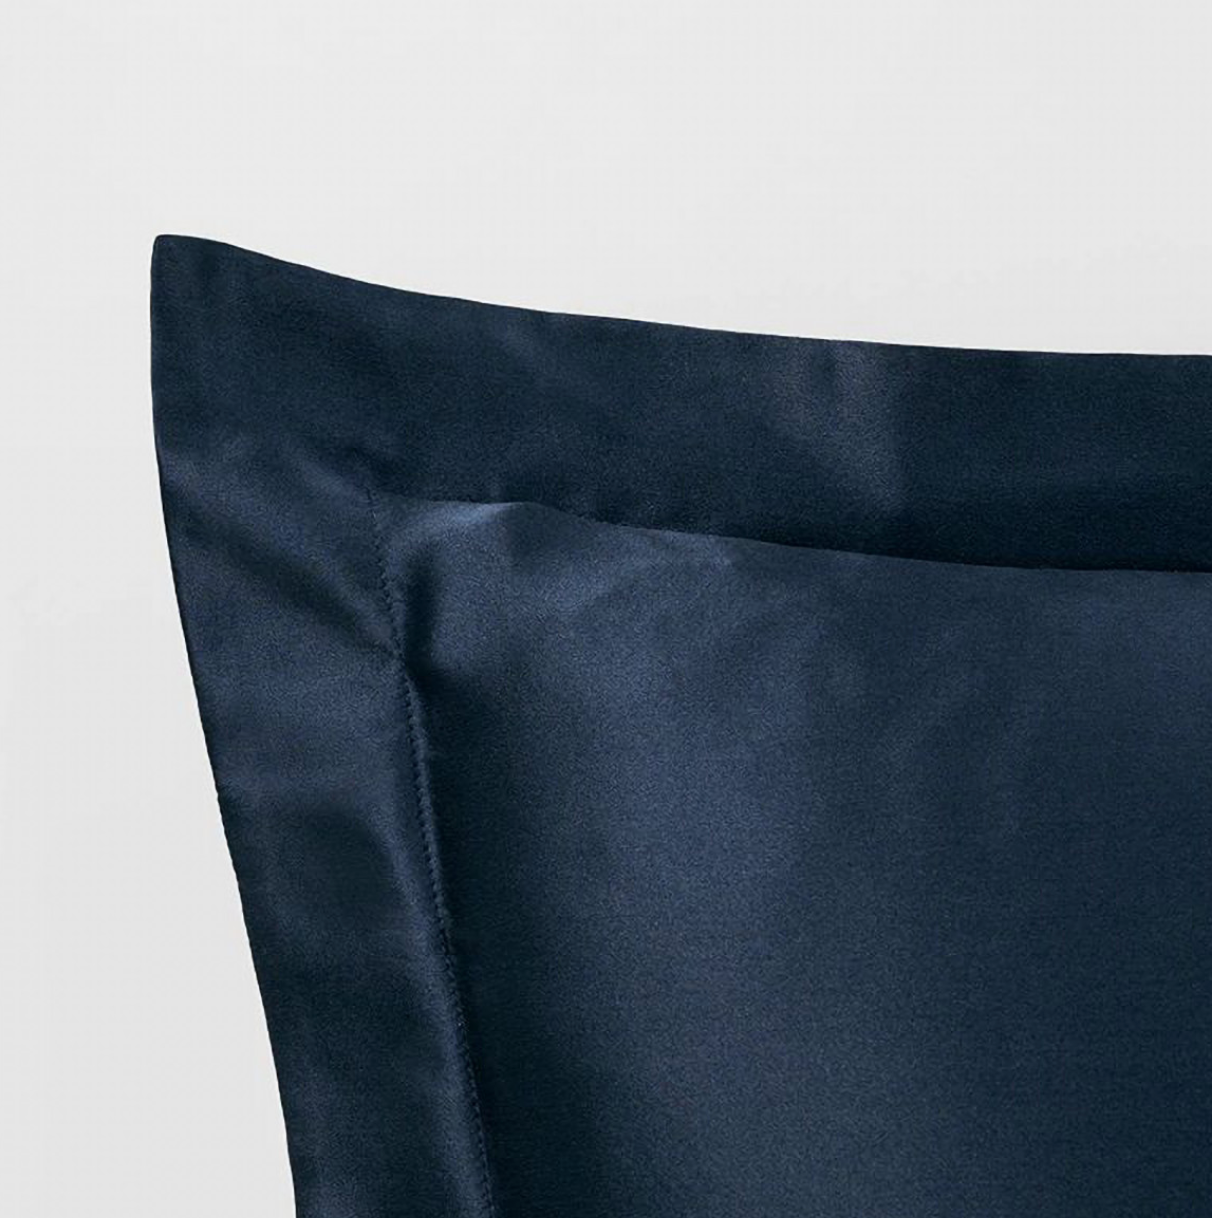 Lanham Silk Tailored Pillowcase